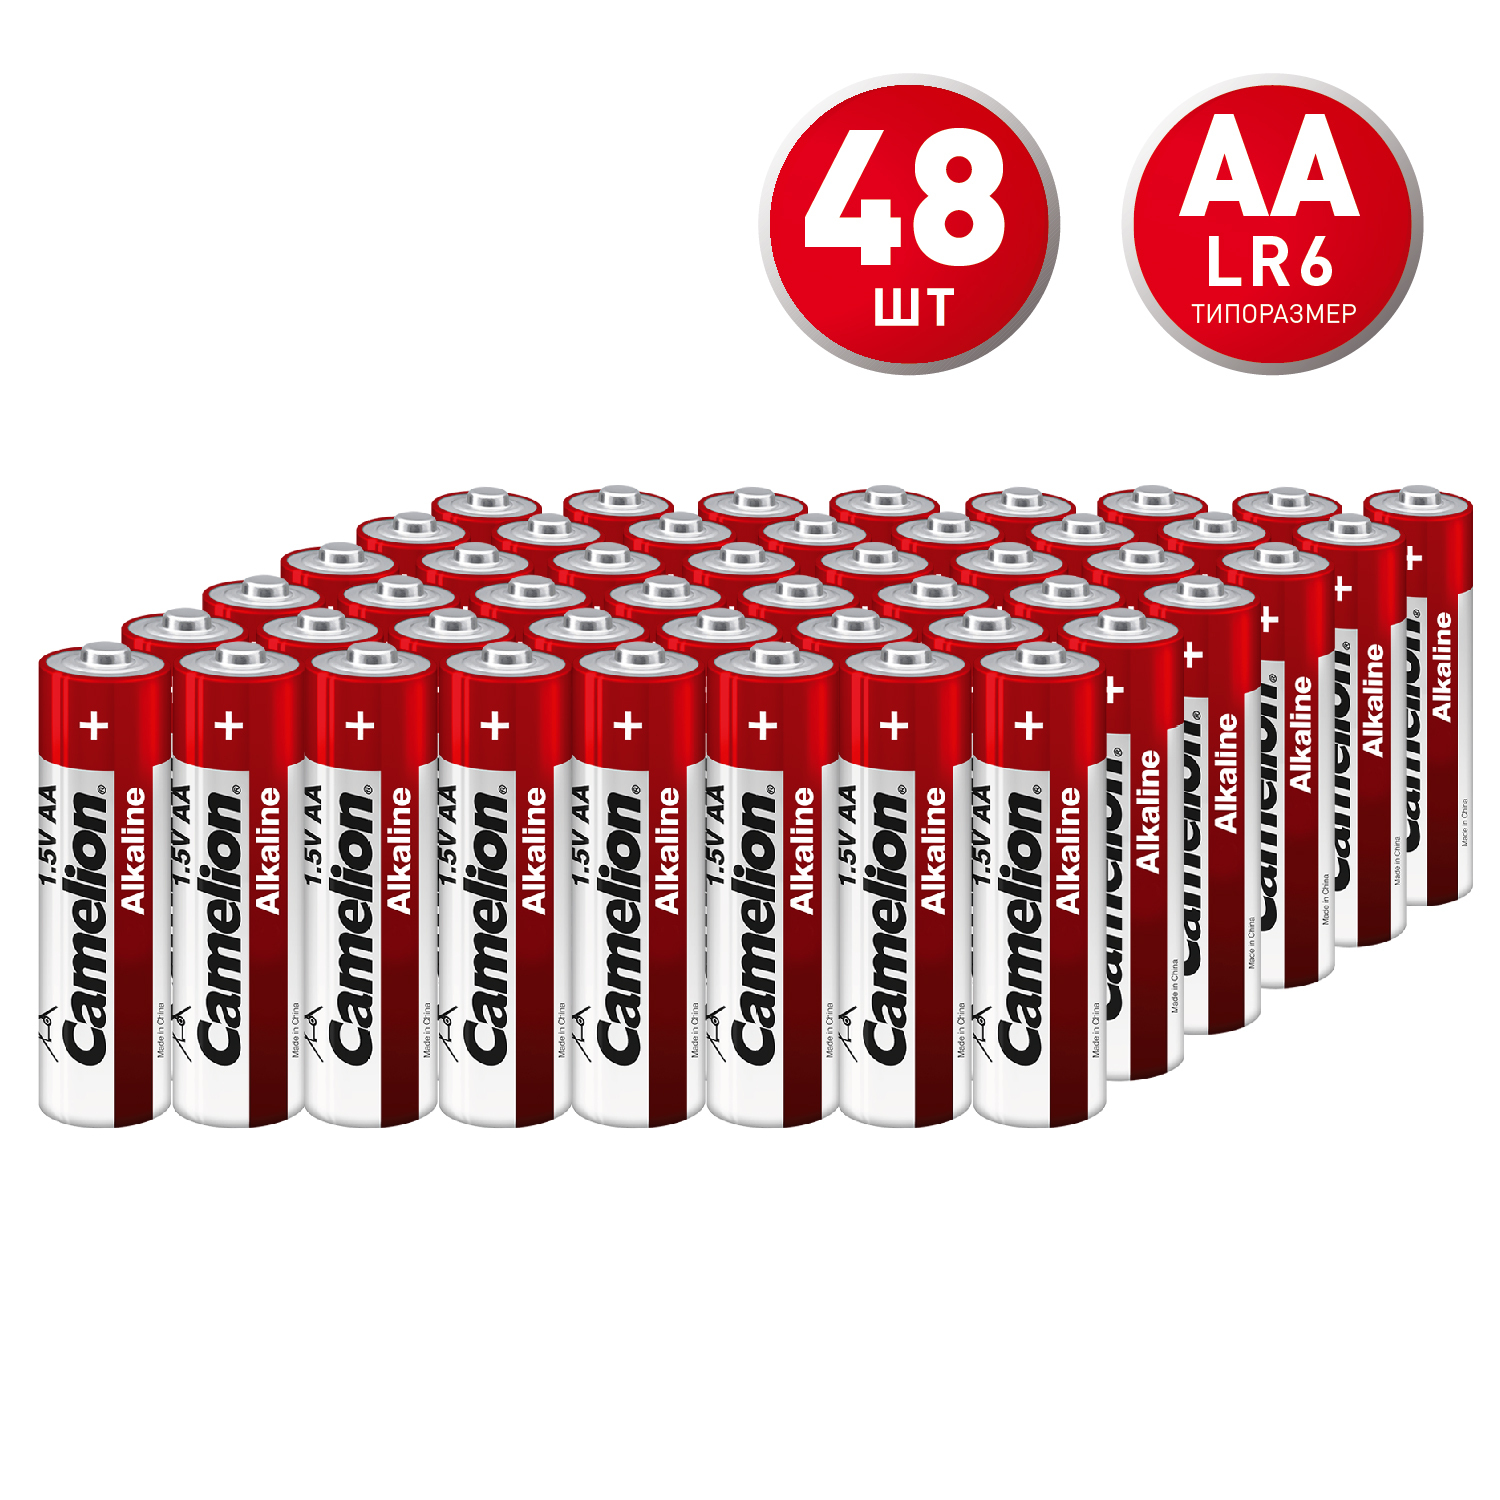 Батарейка Camelion Plus (LR6-BP4) АА пальчиковая LR6 1,5 В (48 шт.) plus alkaline bl10 lr6 lr6 bp10 пальчиковая батарейка аа 1 5в camelion 14854 80 шт